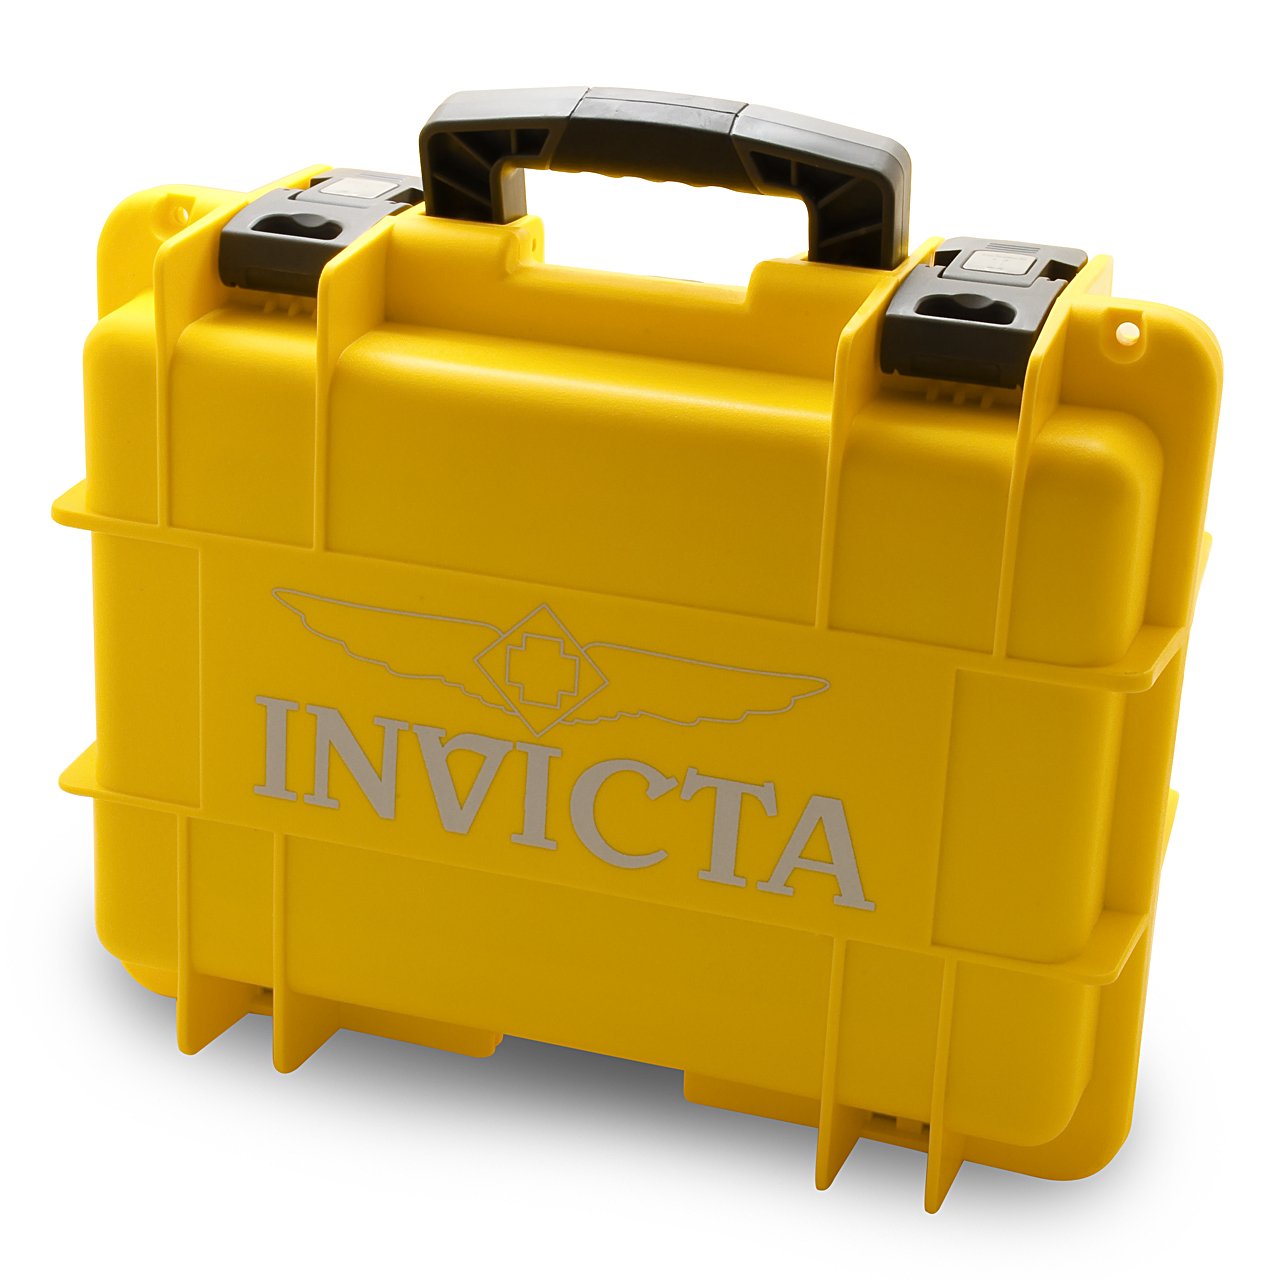 Invicta IG0098-RLC8S-Y 8 Slot Yellow Plastic Watch Box Case